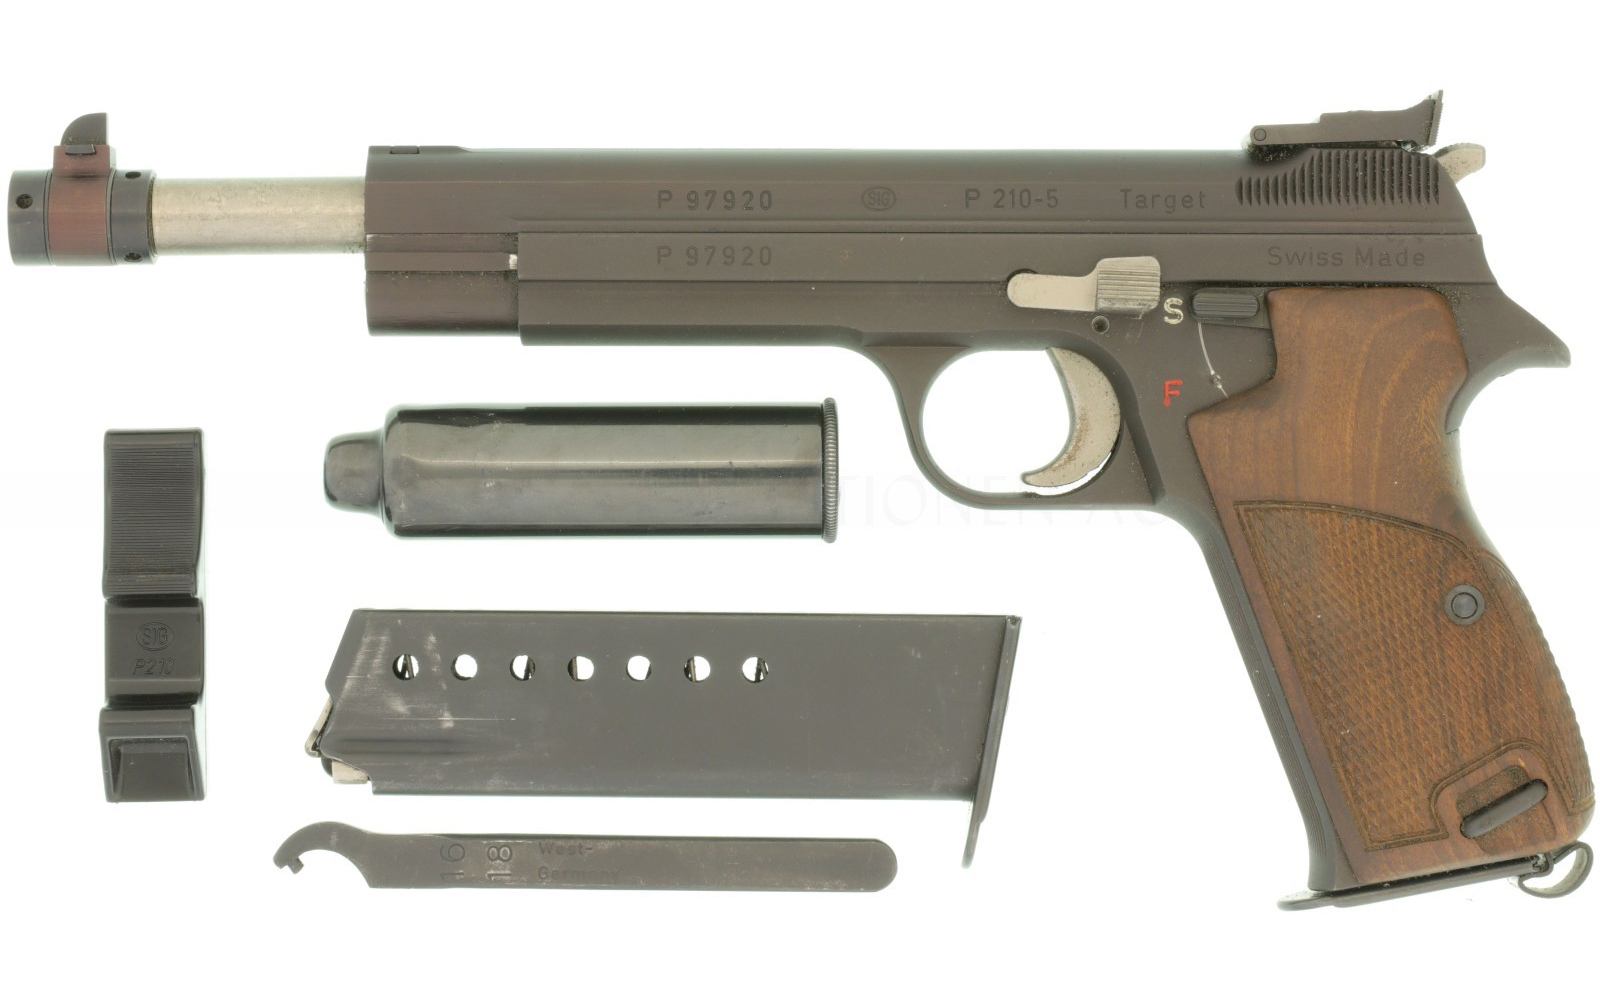 Pistole, SIG P 210-5 Target, Kal. 9mmP